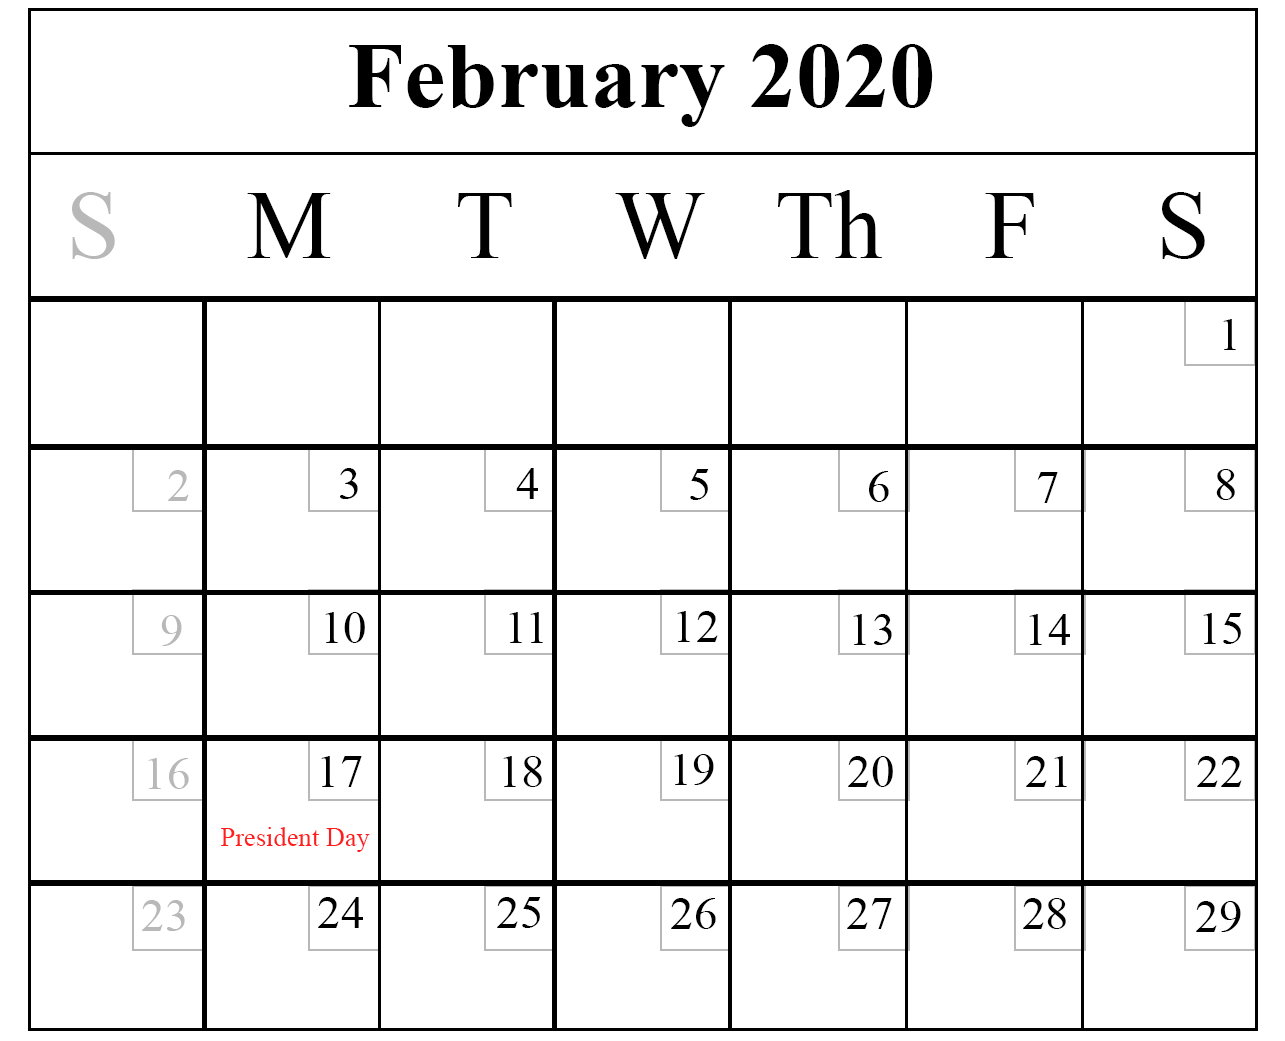 February 2020 Calendar PDF, Word, Excel